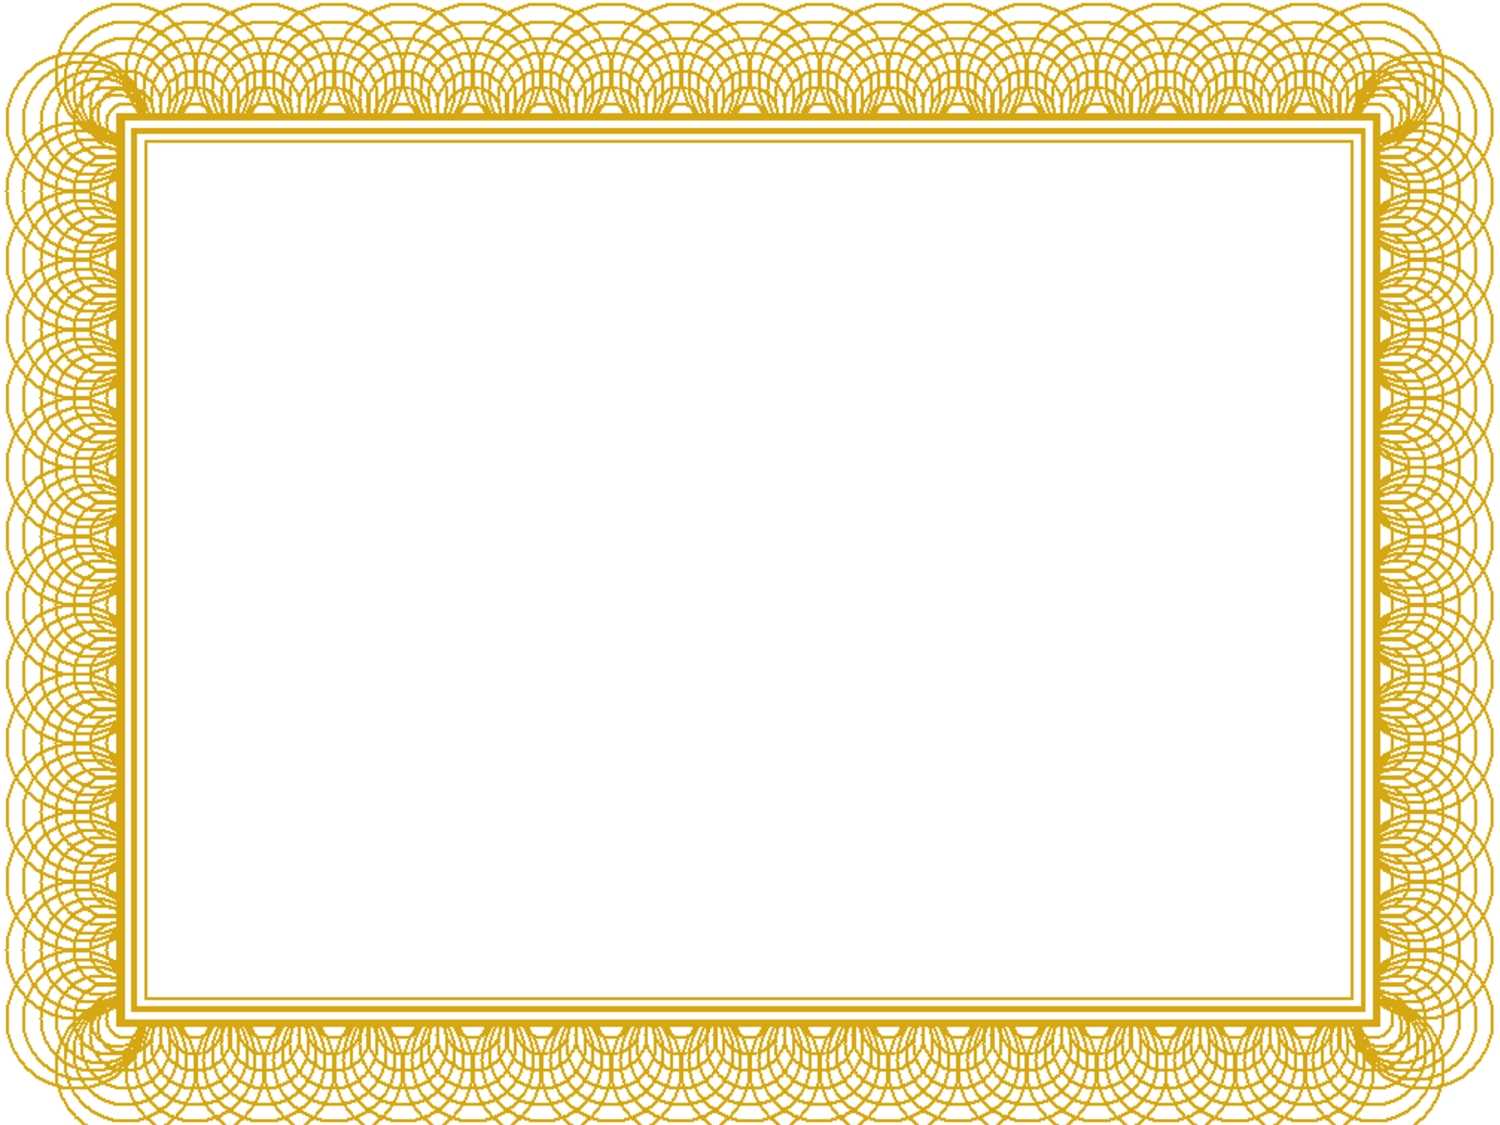 Award Certificate Border Template Pertaining To Gold Inside Award Certificate Border Template